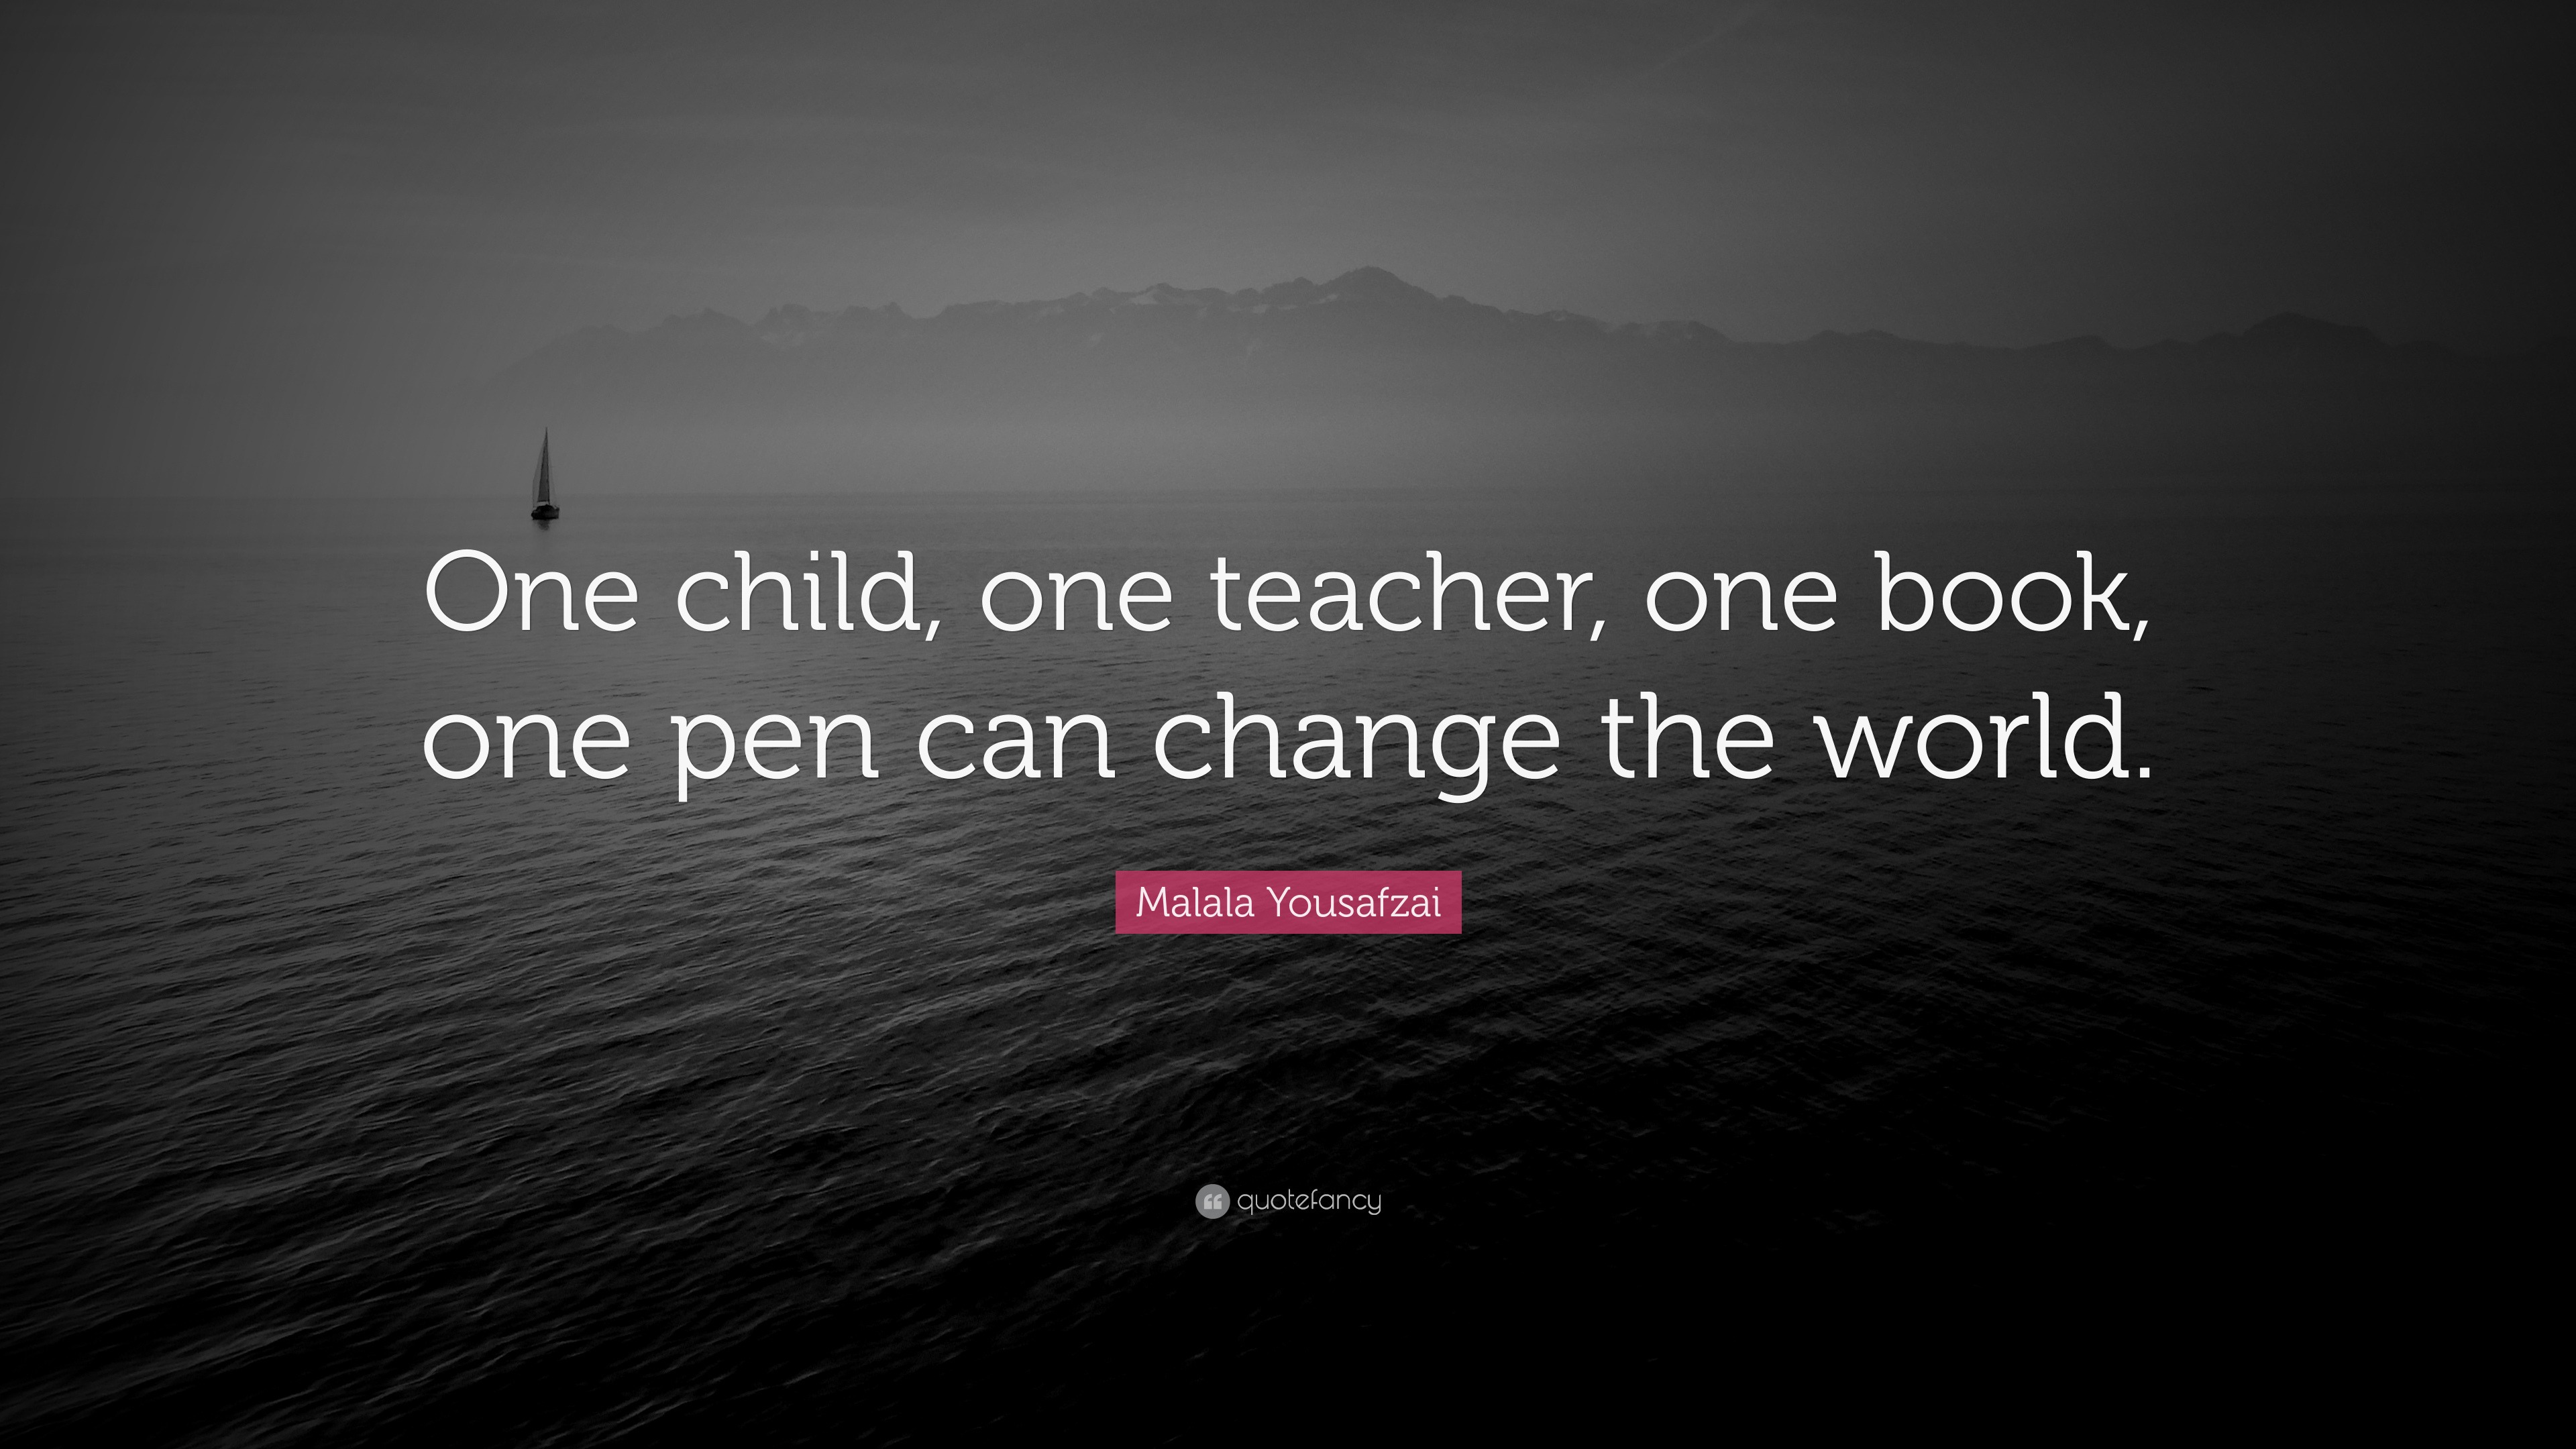 Malala Yousafzai Quote “ e child one teacher one book one pen